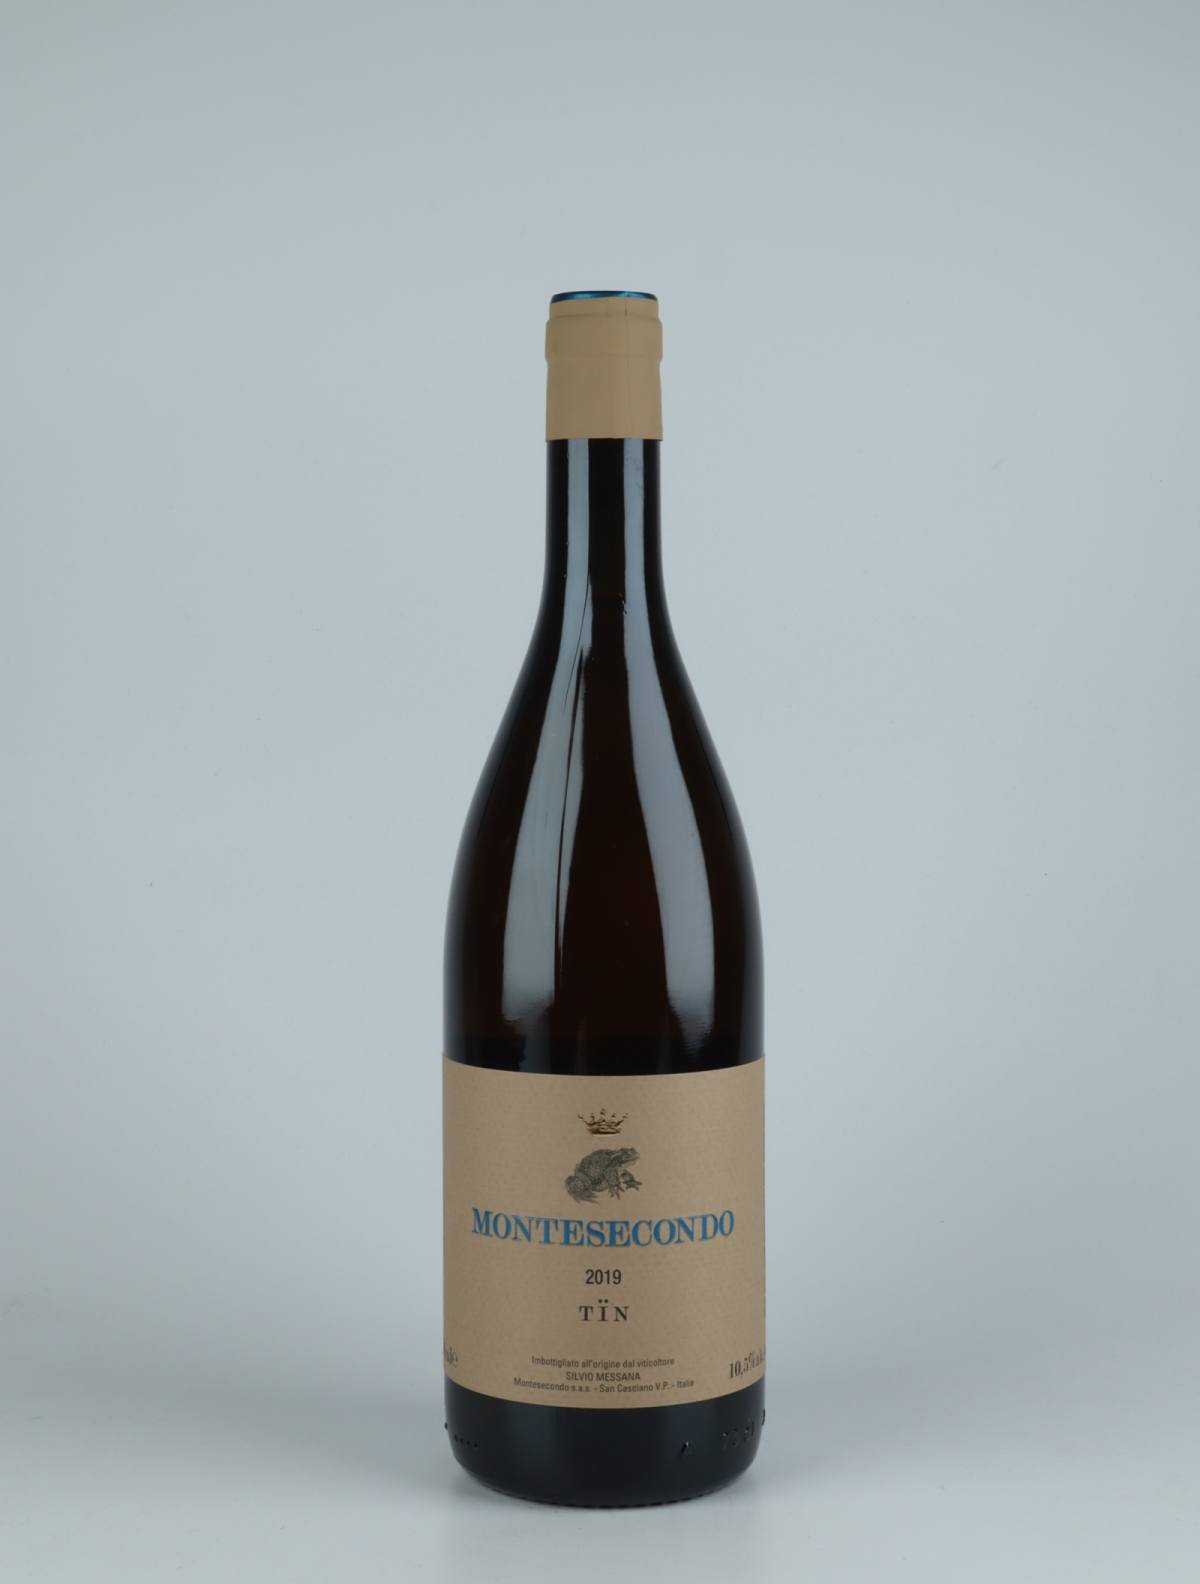 A bottle 2019 Tïn - Trebbiano Orange wine from Montesecondo, Tuscany in Italy